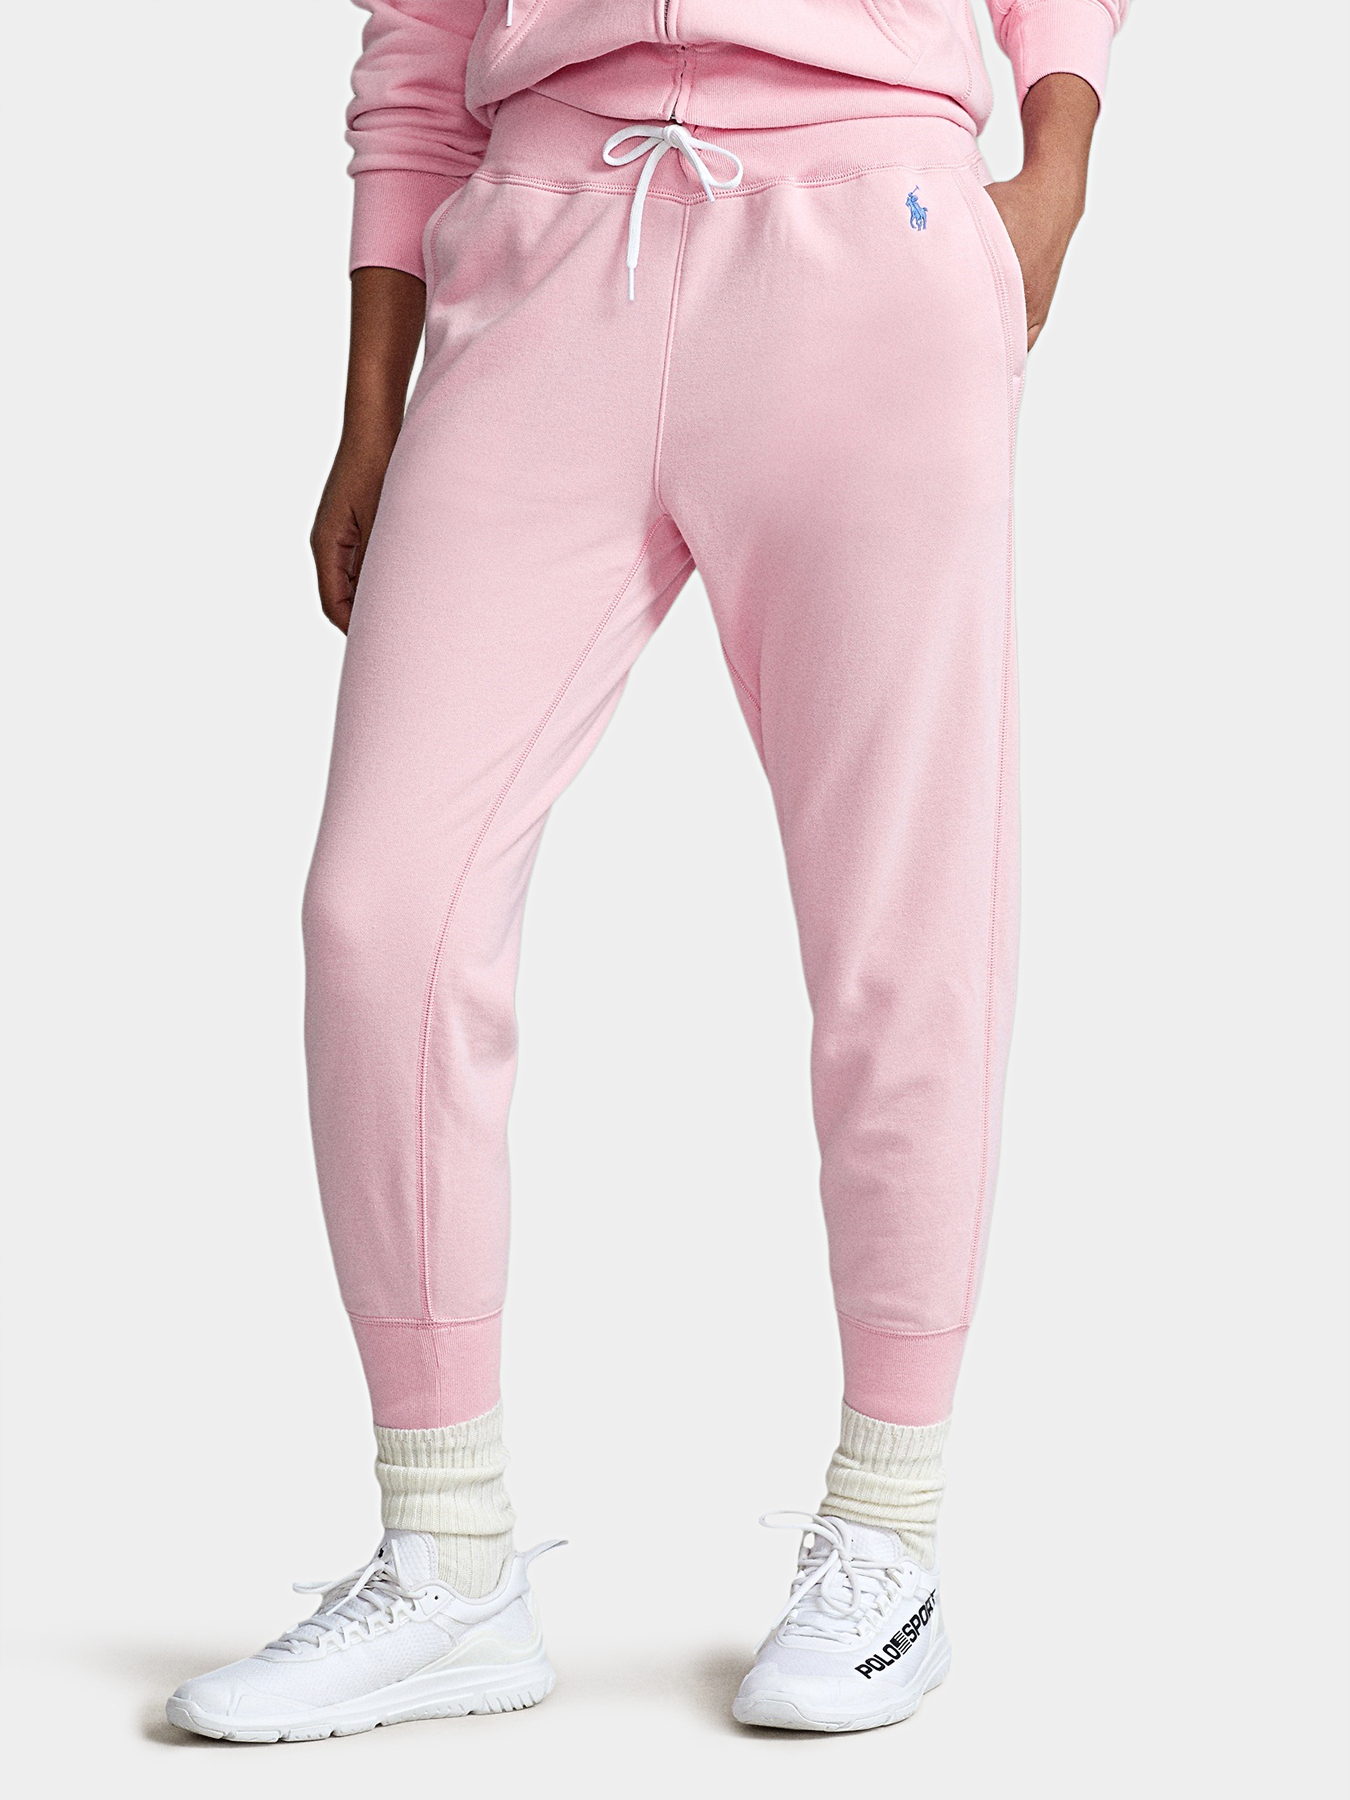 Sports pants in pale pink color brand POLO RALPH LAUREN —  /en